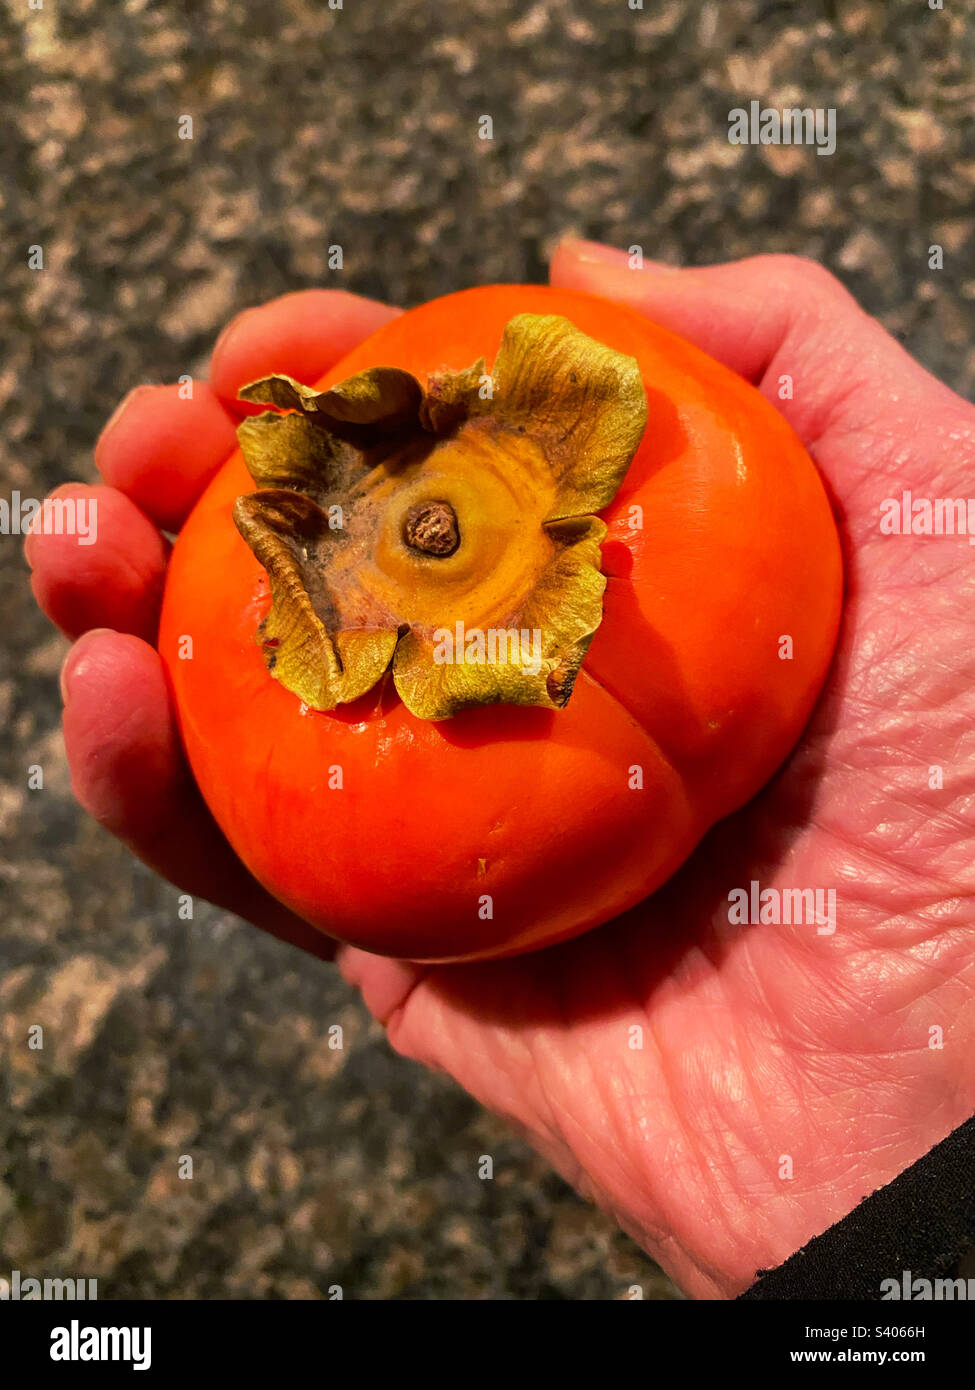 Ripe Fugu persimmon in a man’s hand Stock Photo